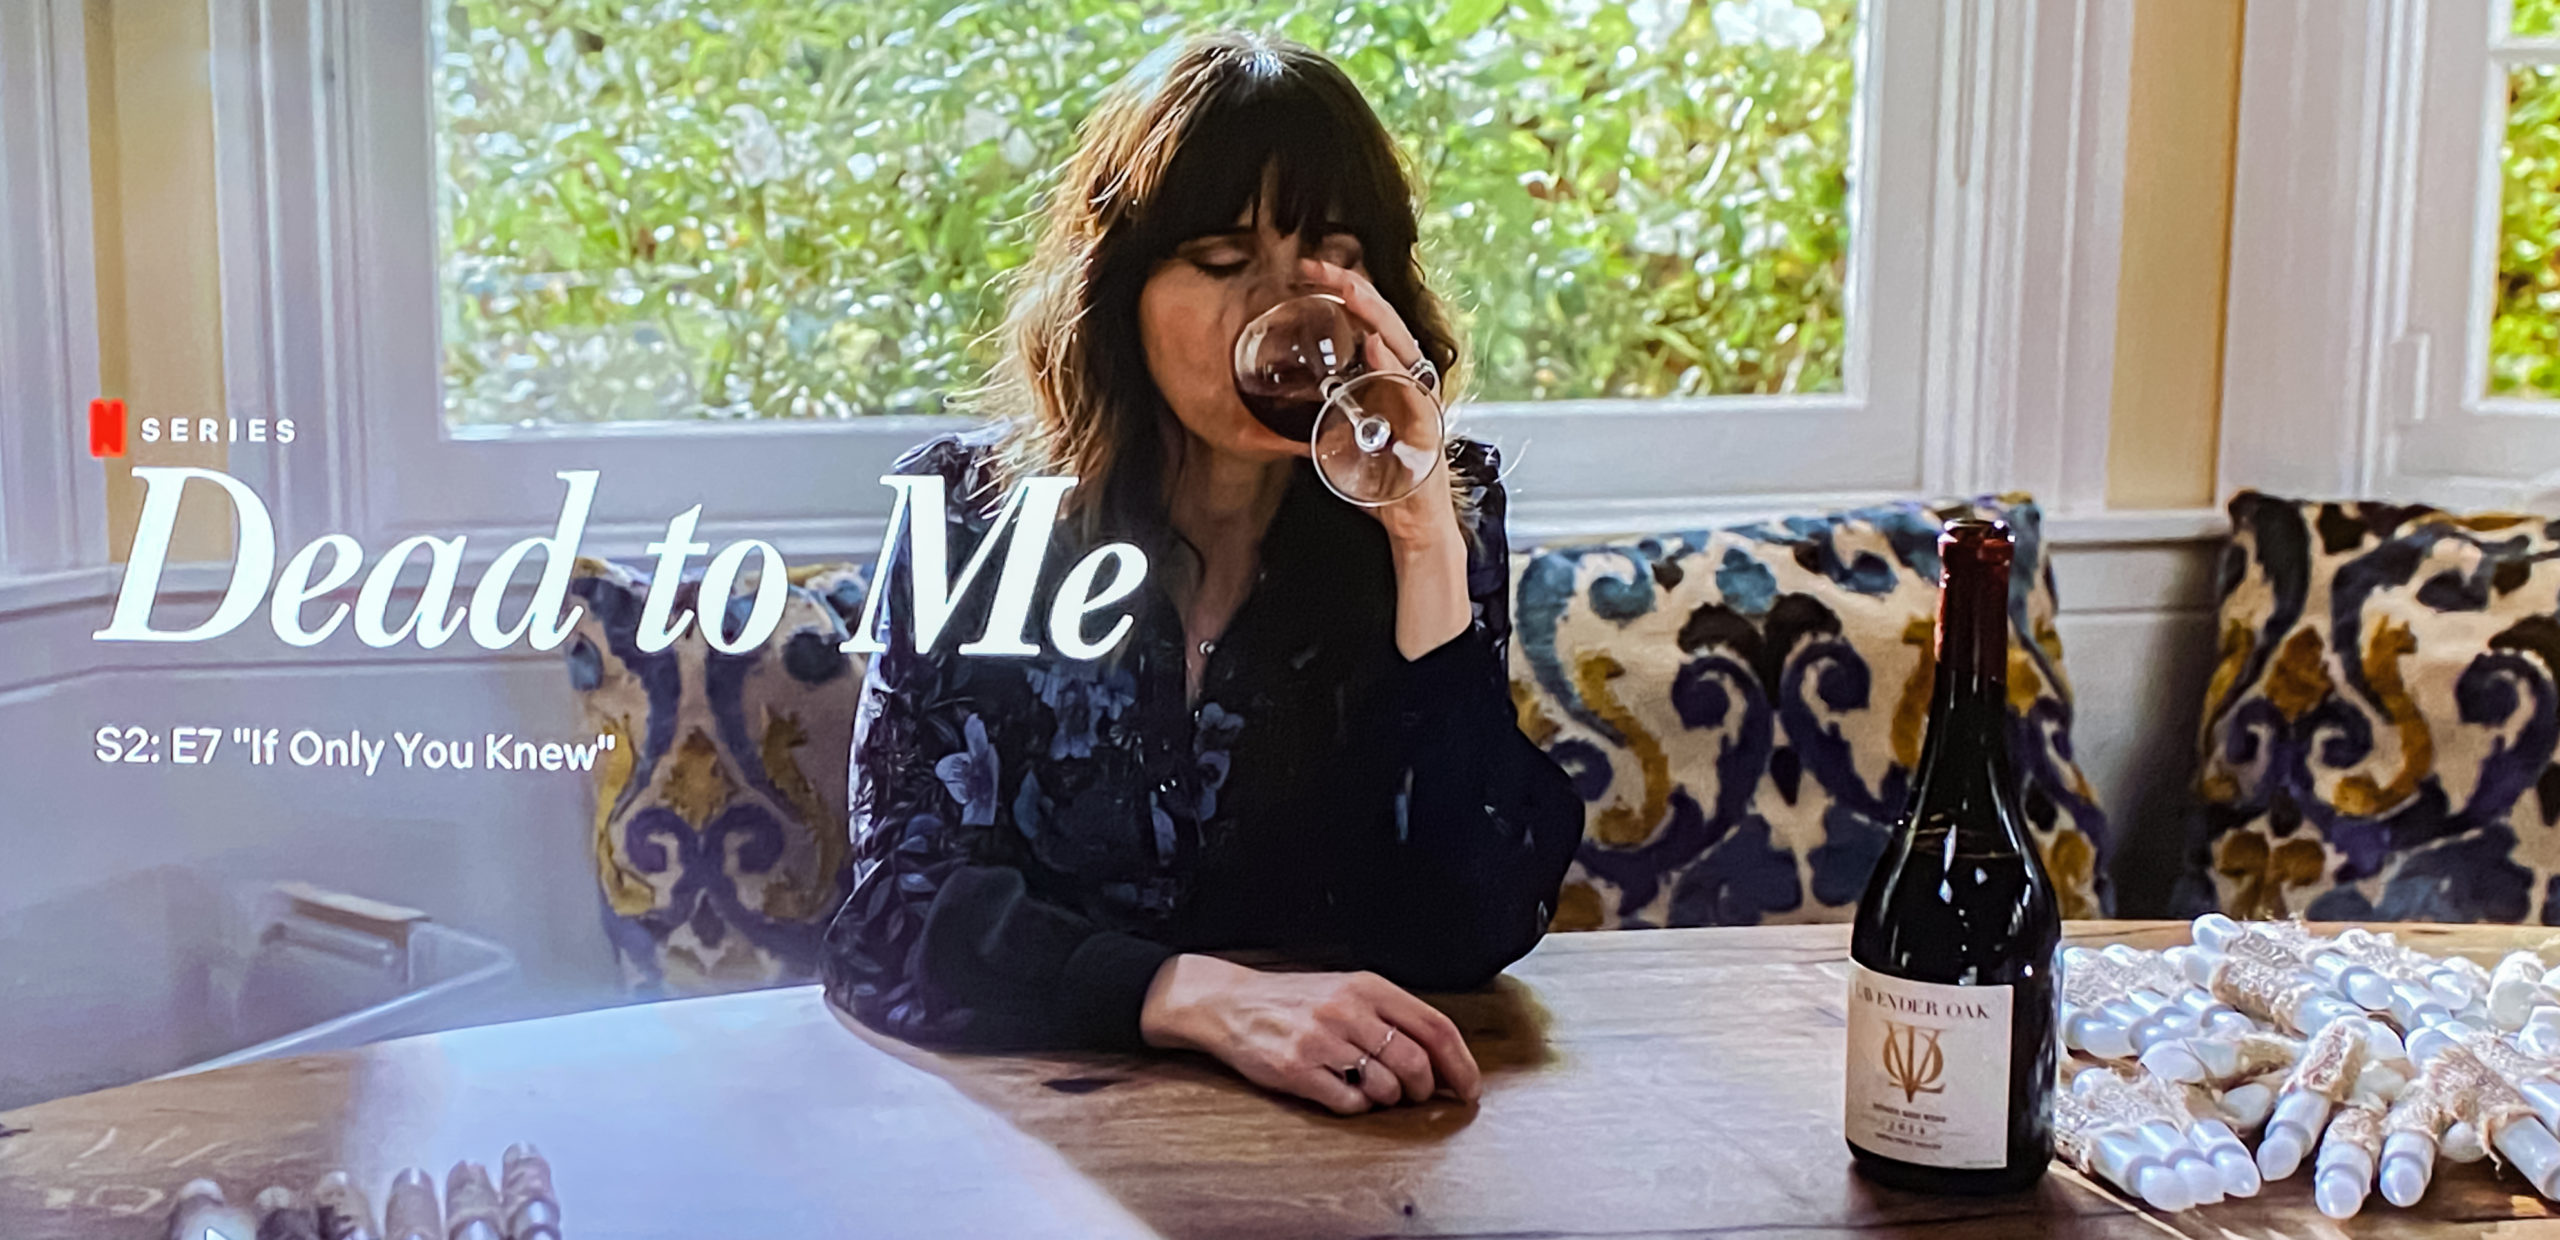 Dead to Me - Season 2 still shot - drinking wine